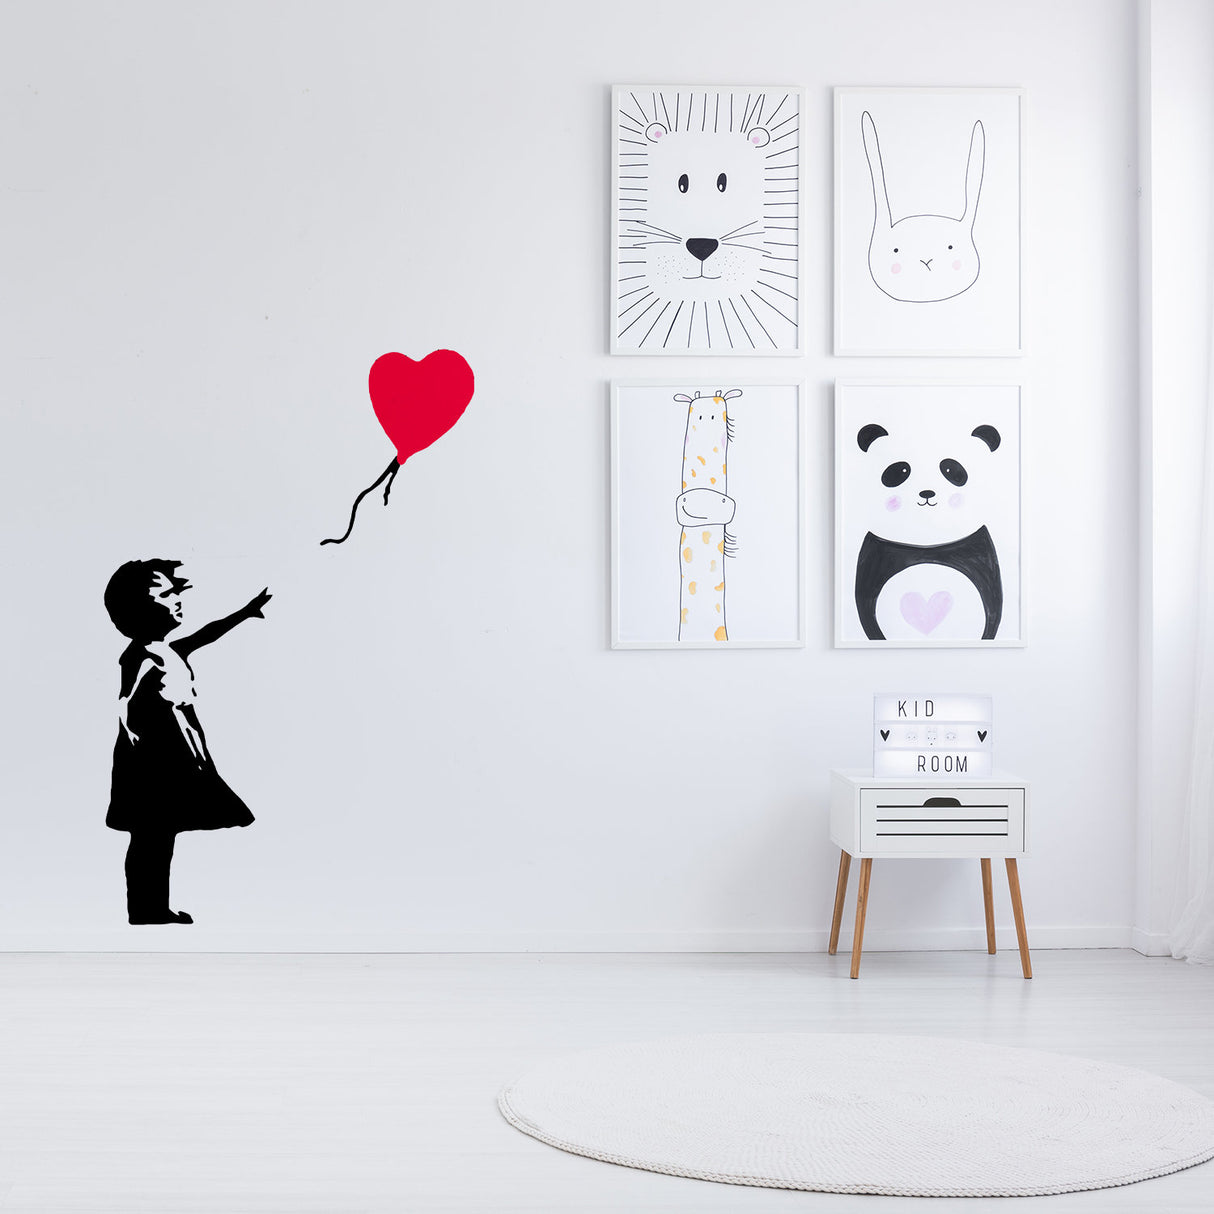 Banksy Girl With Heart Balloon Wall Sticker - Vinyl Baloon Hot Air Decal